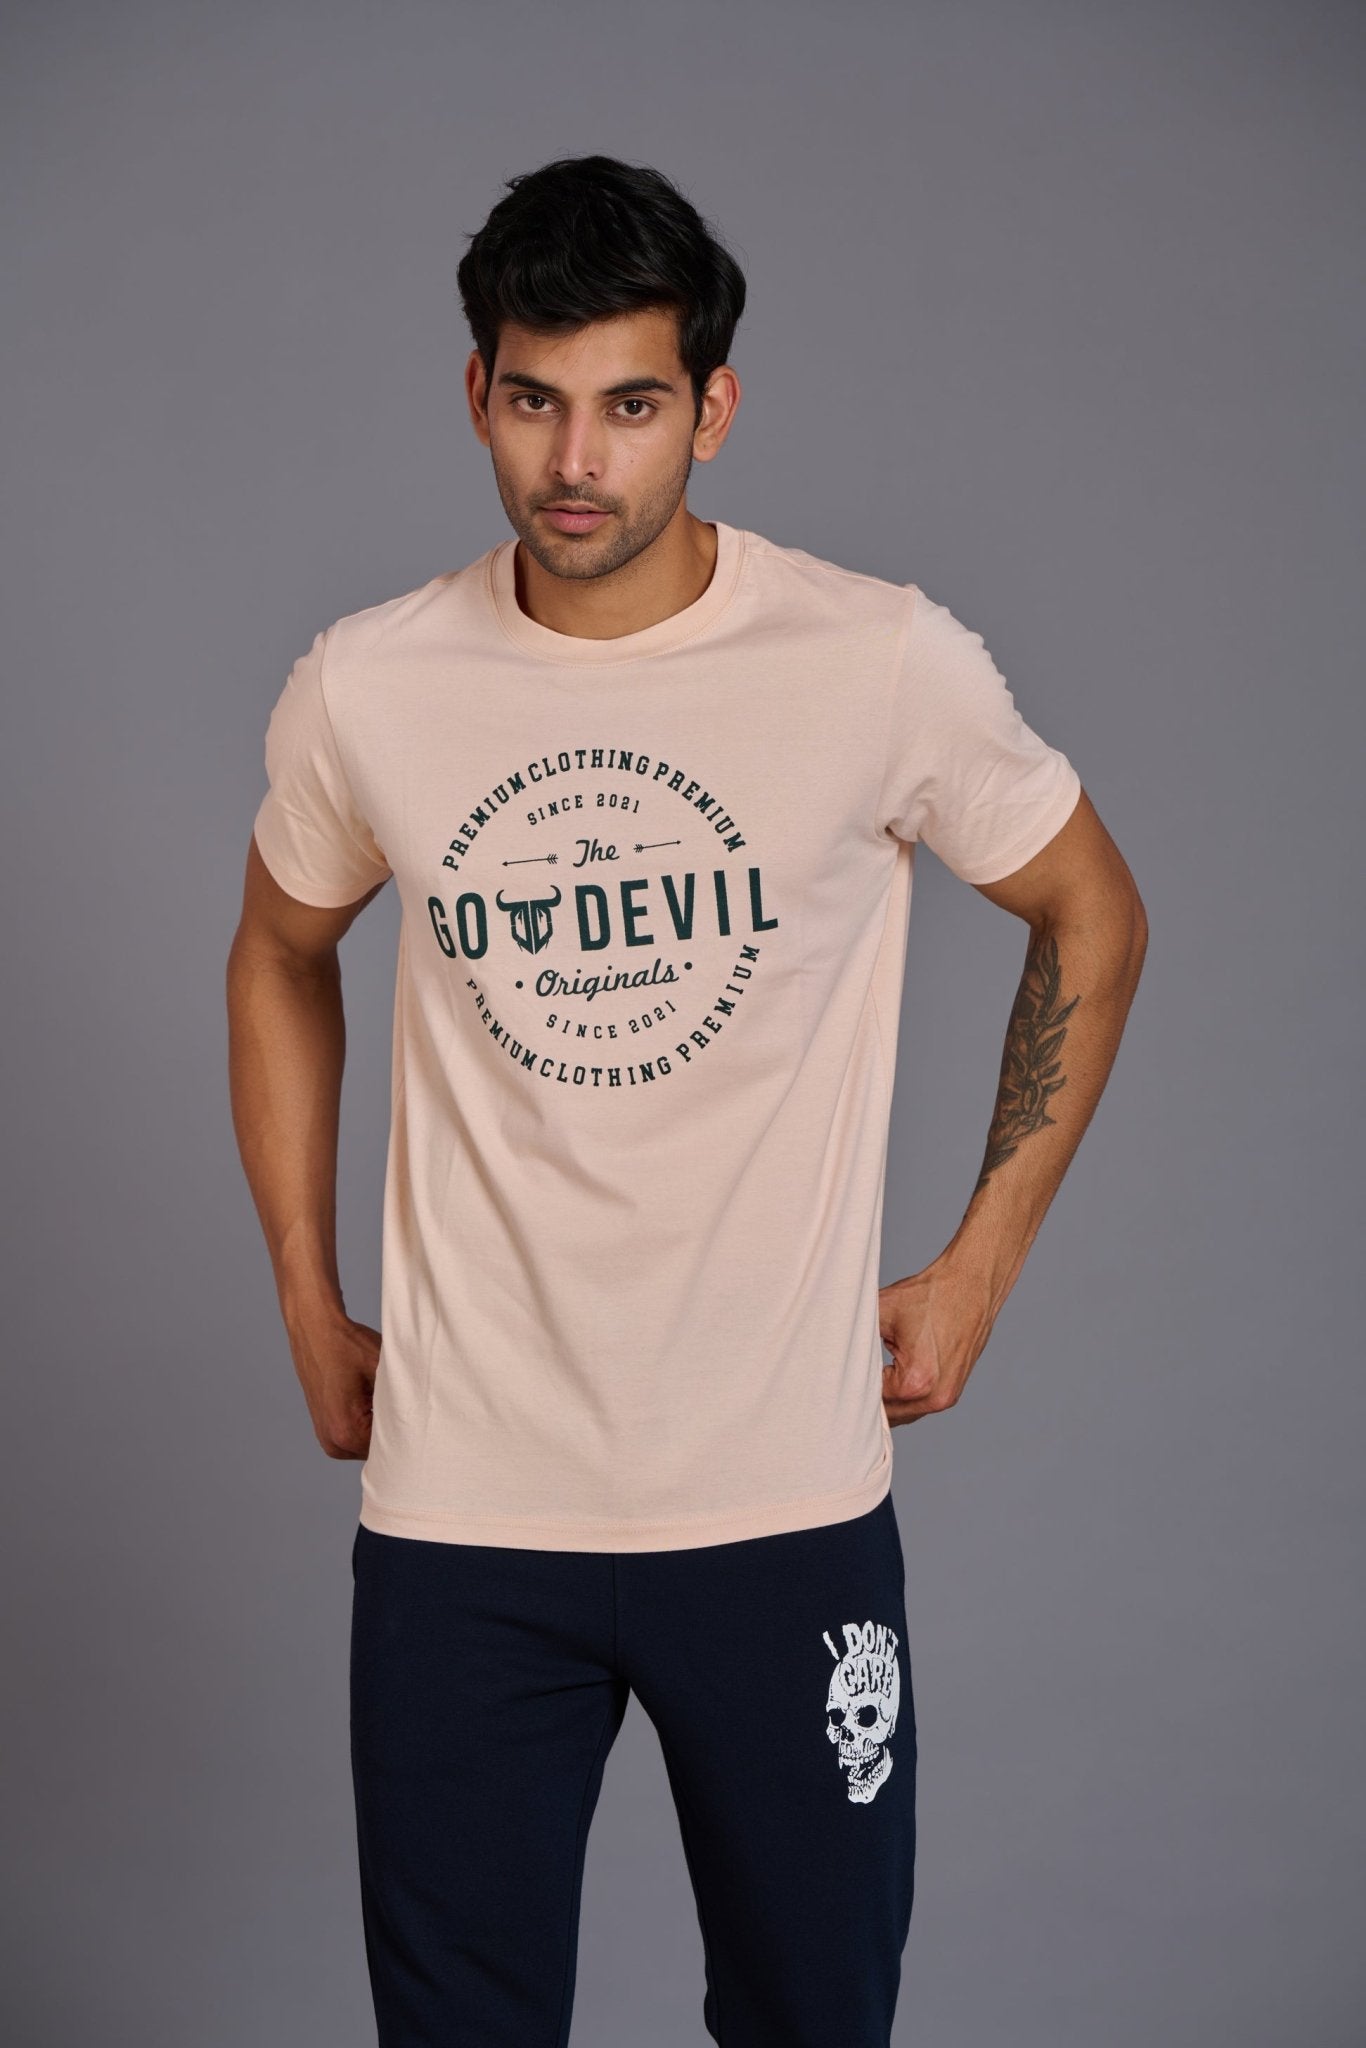 Go Devils Originals Printed Light Color T-Shirt for Men - Go Devil